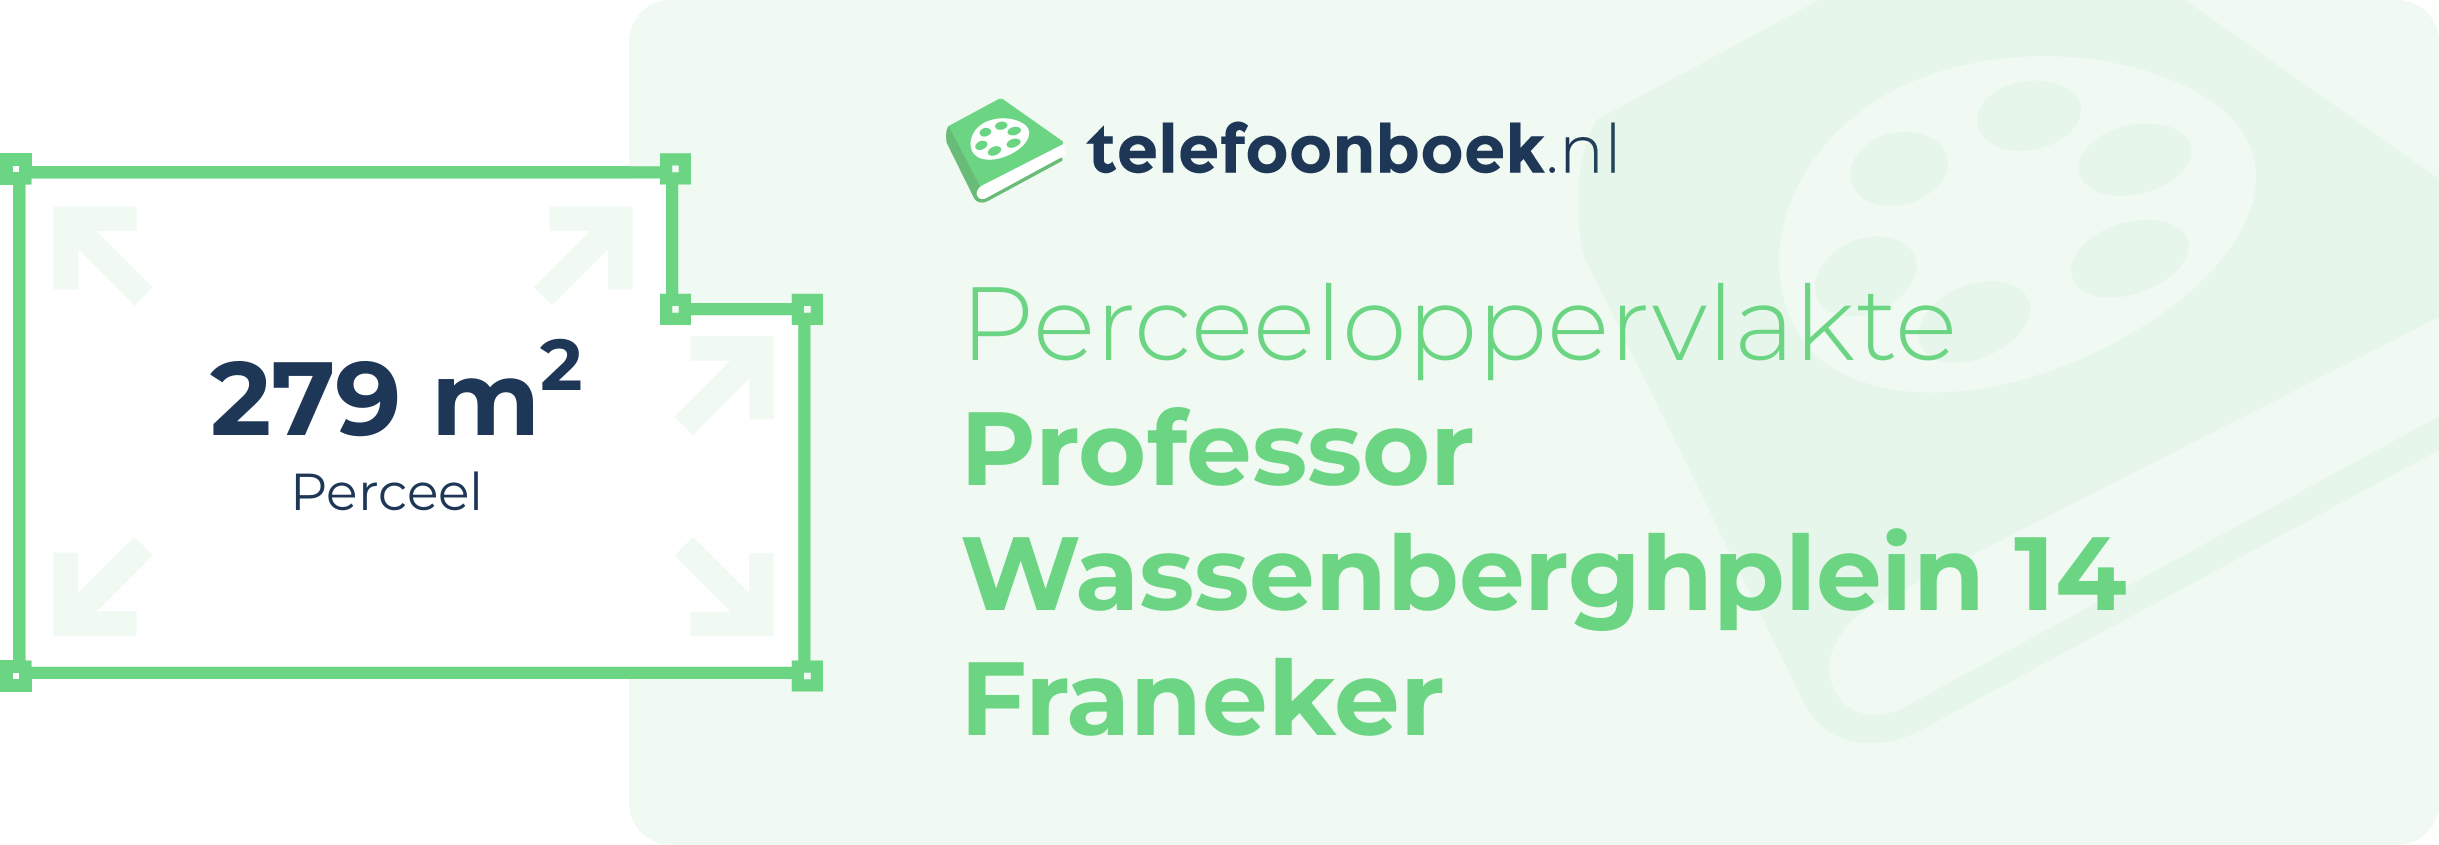 Perceeloppervlakte Professor Wassenberghplein 14 Franeker